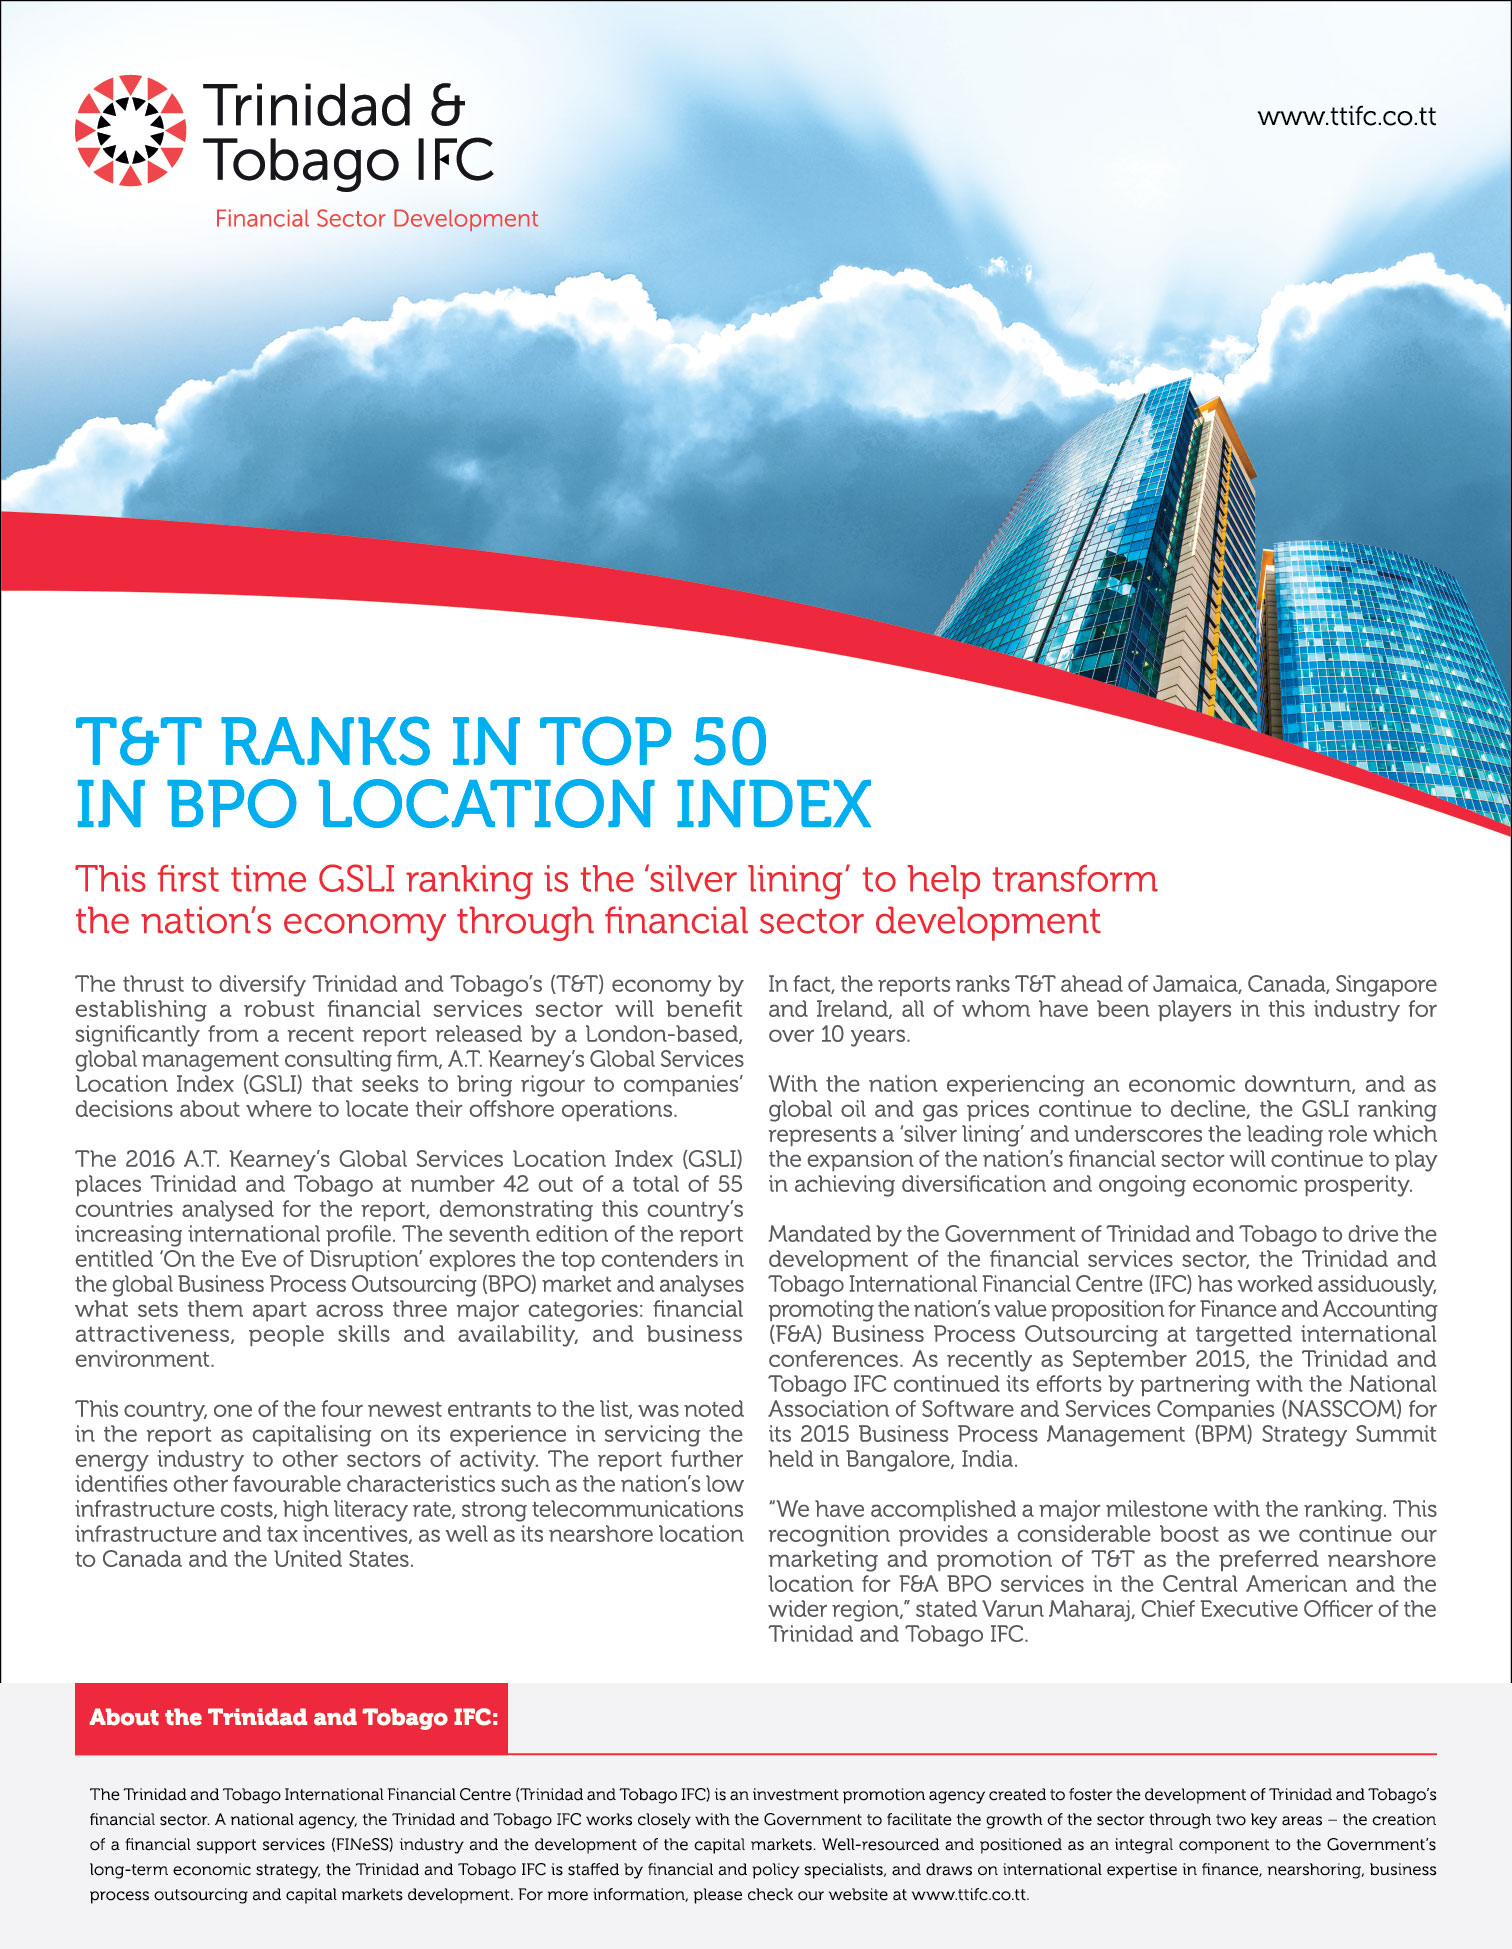 T&T Ranks In Top 50 BPO Locations Index